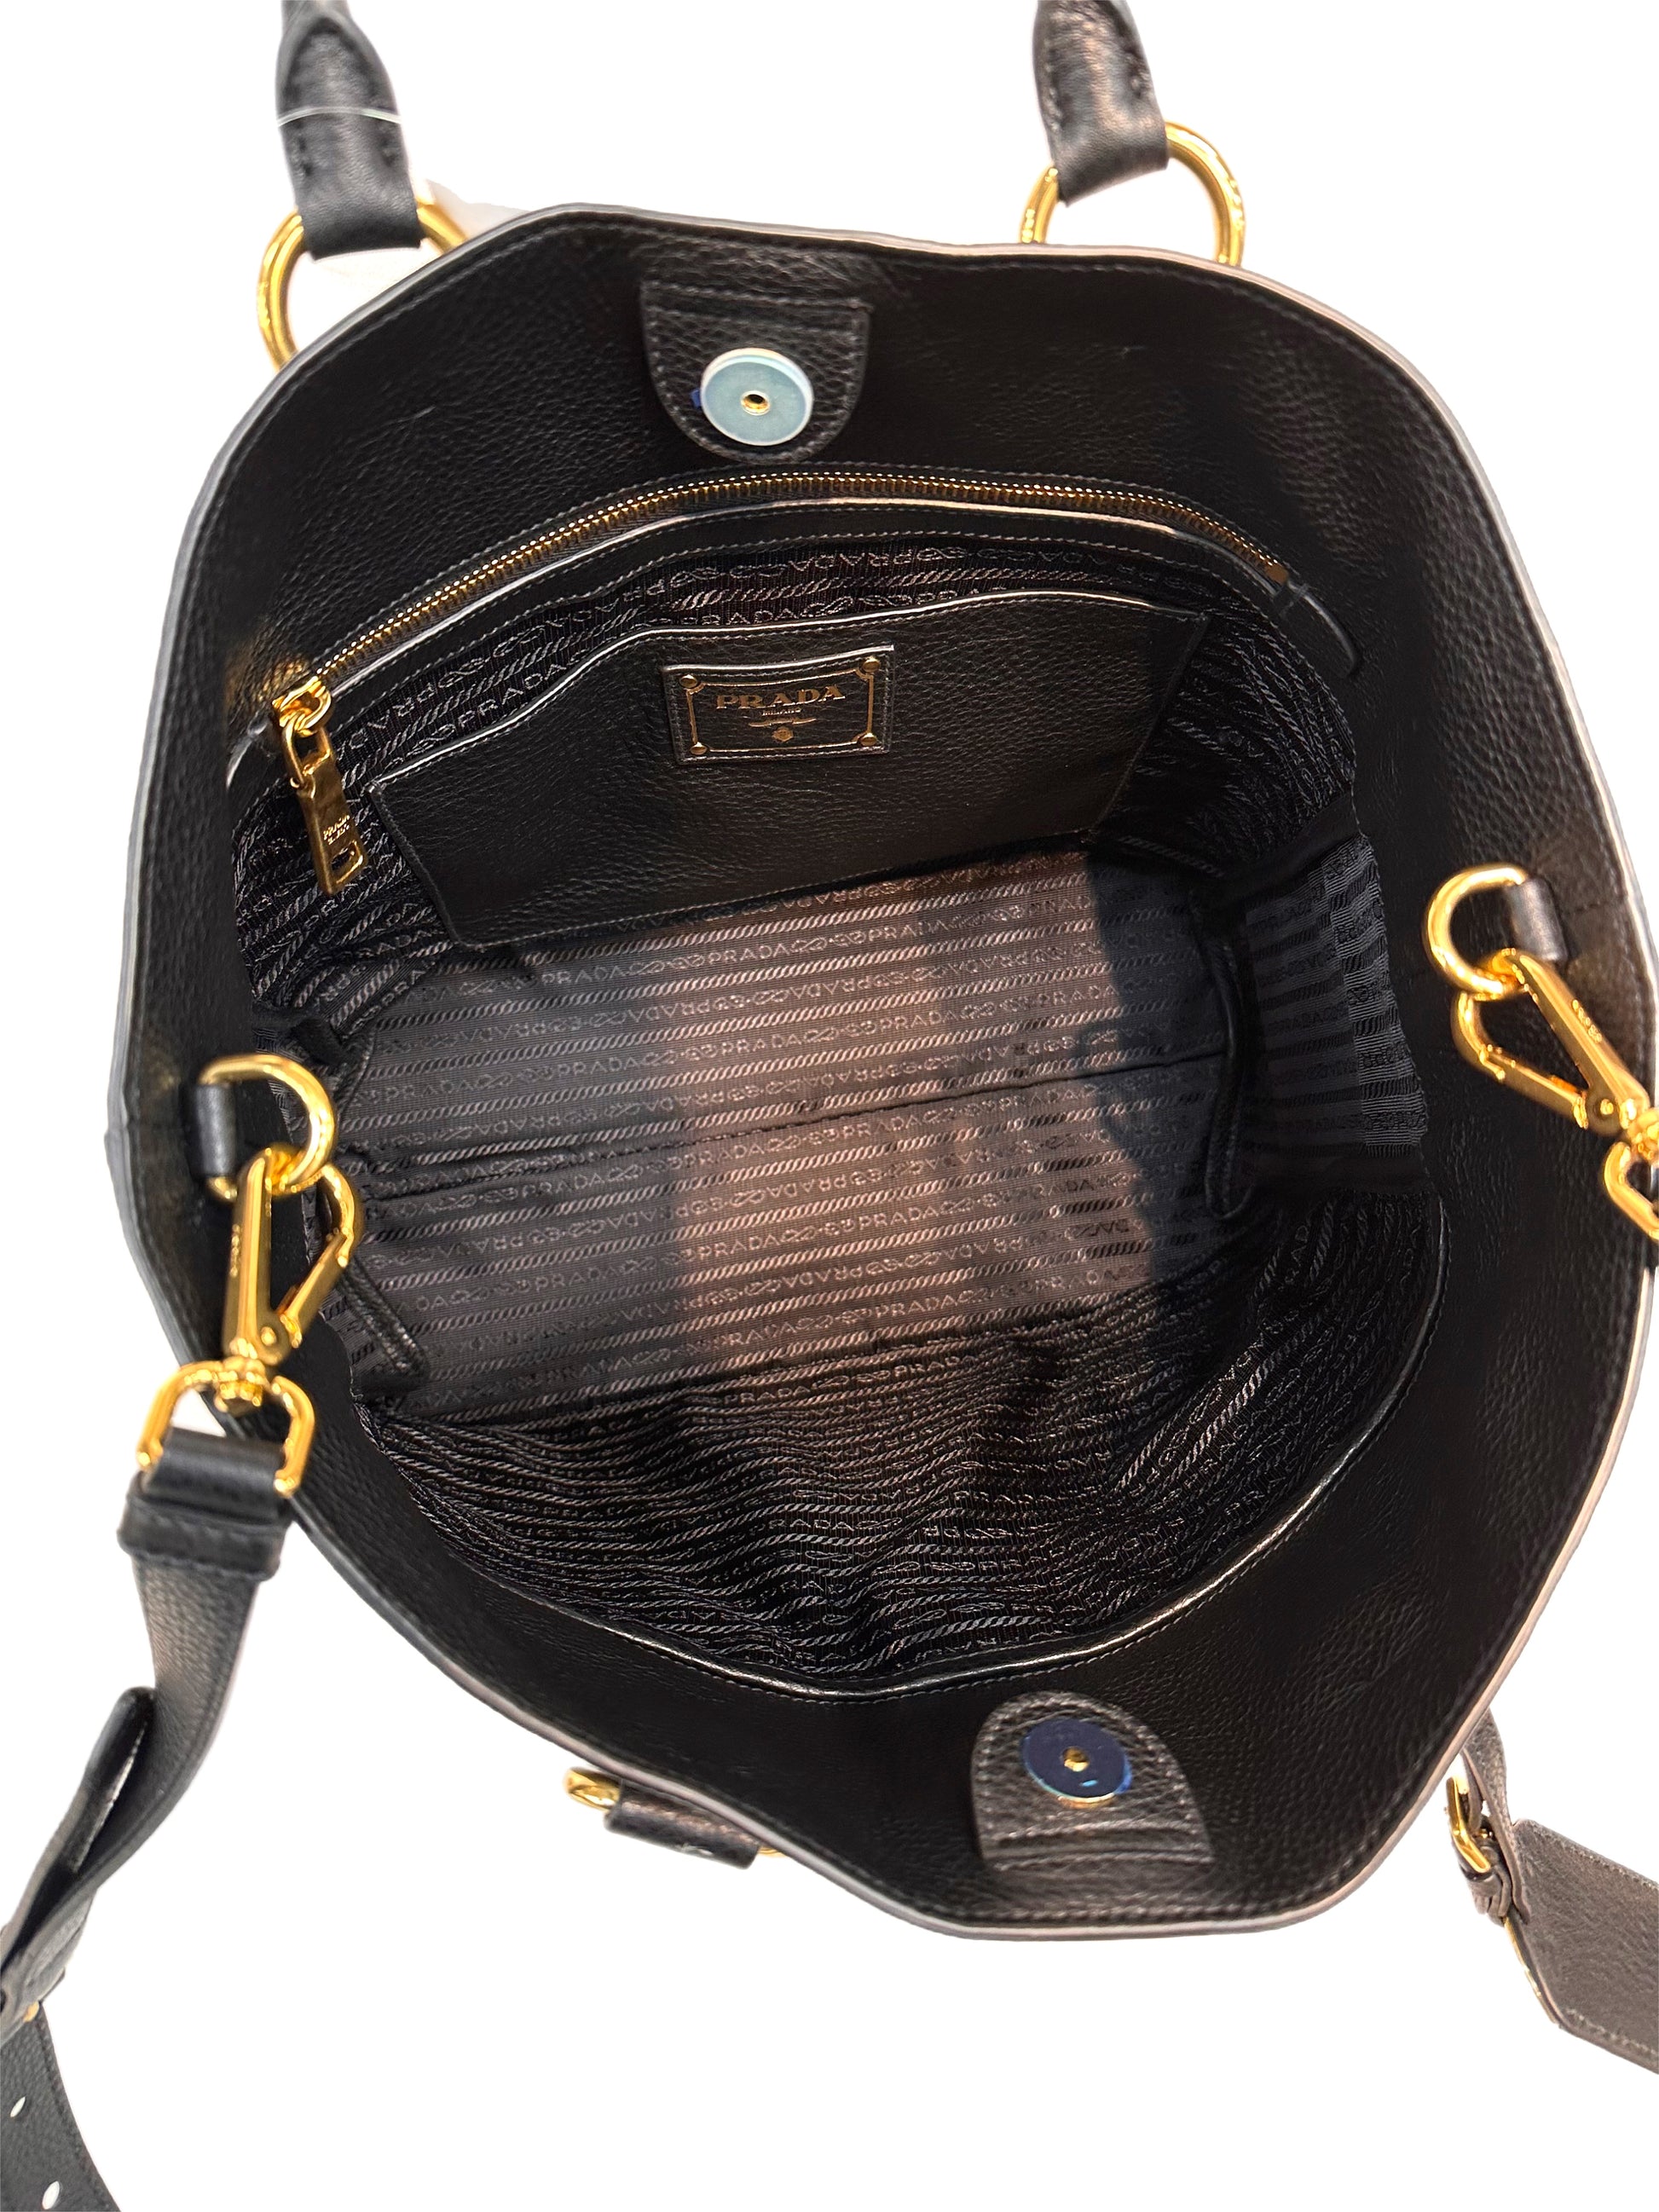 prada leather tote bag black